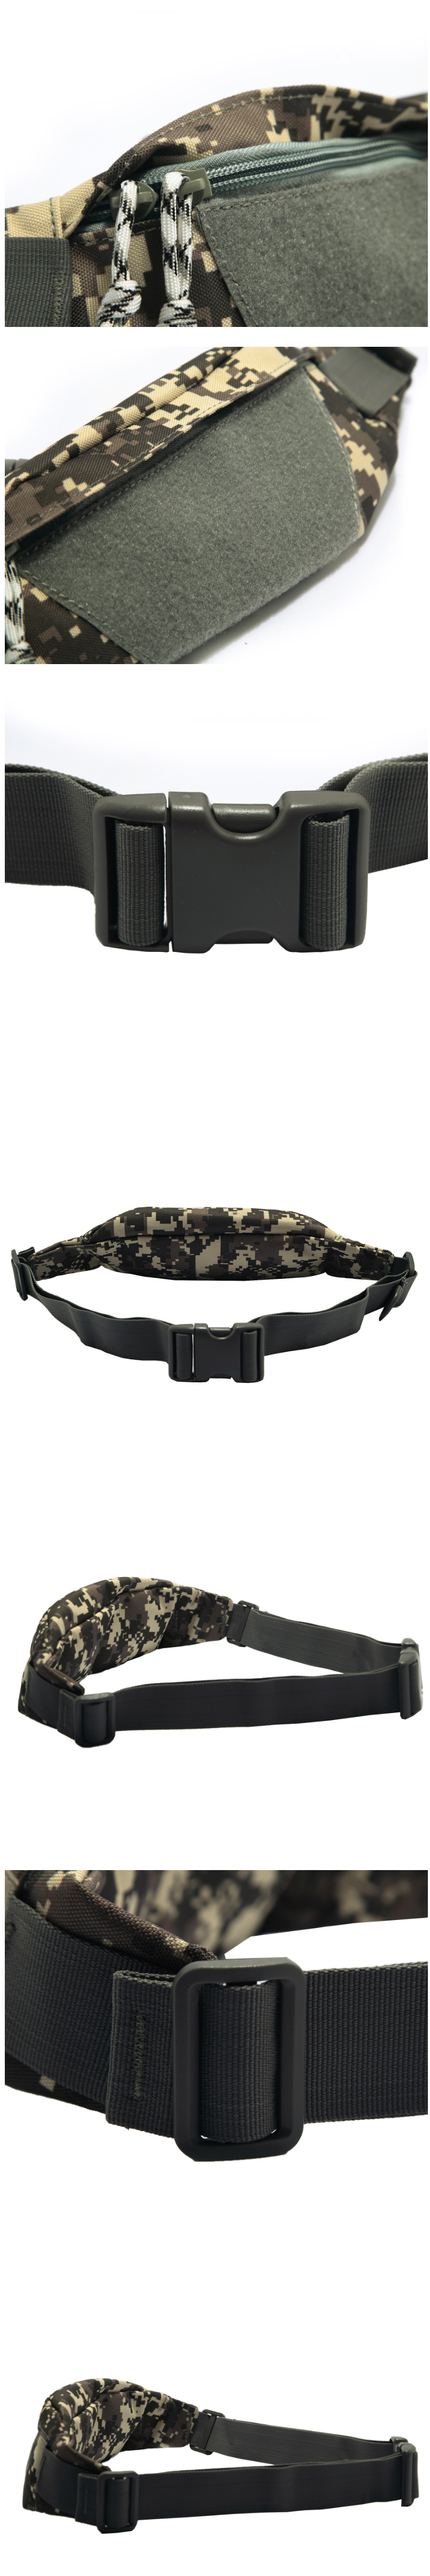 Camouflage-Tactical-Waist-Bag-Cross-Bag-Tactical-Waist-Bag-Outdoor-Fitness-Leisure-Bag-1568909-2